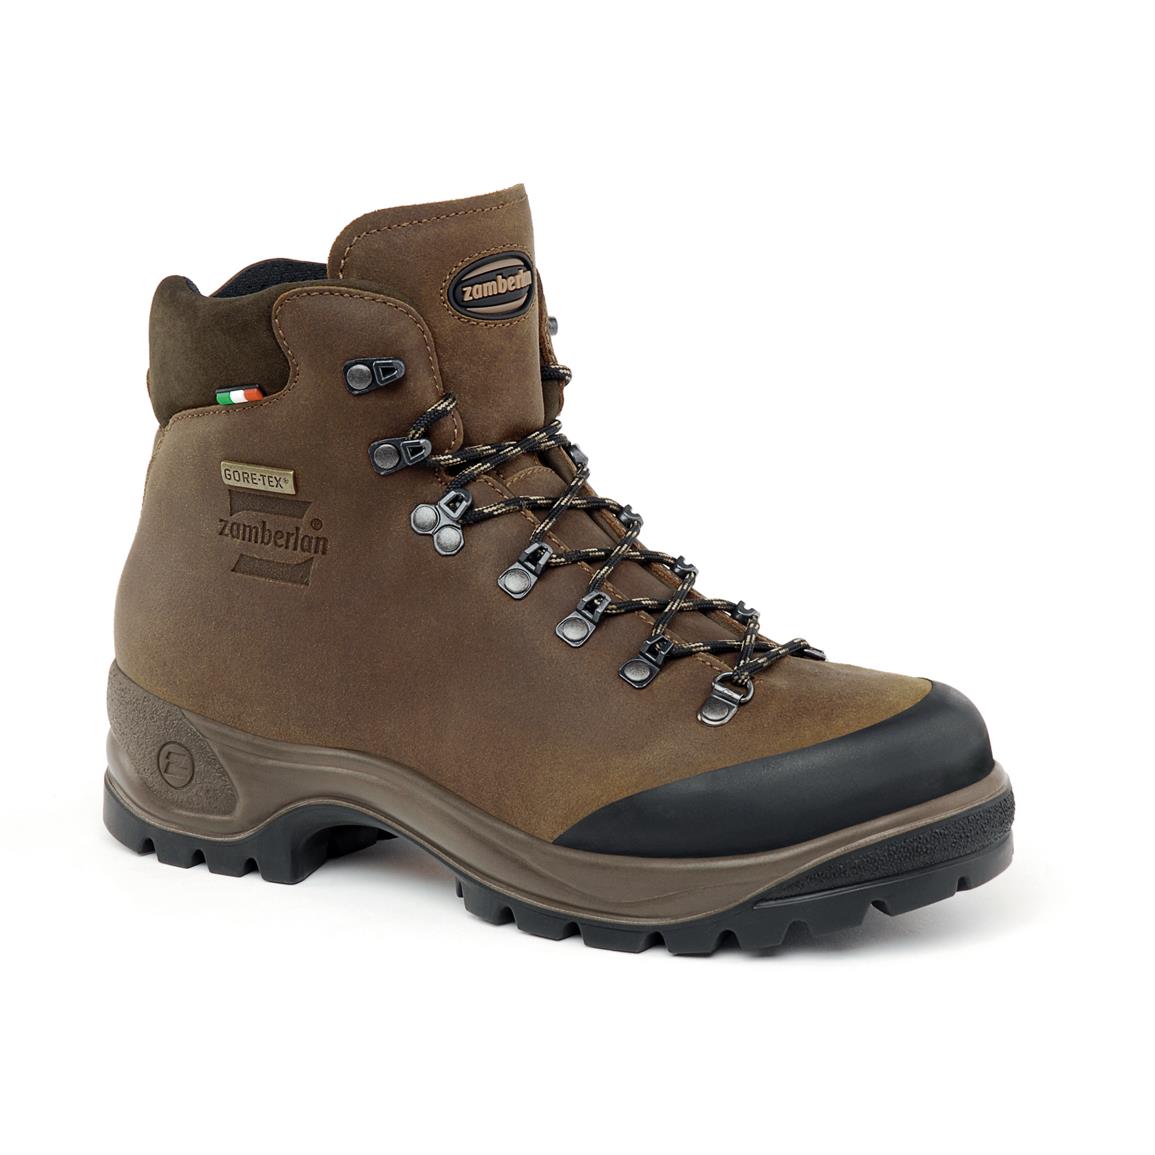 Zamberlan Trek Lite GTX RR Waterproof Hiking Boots - 655555, Hunting ...